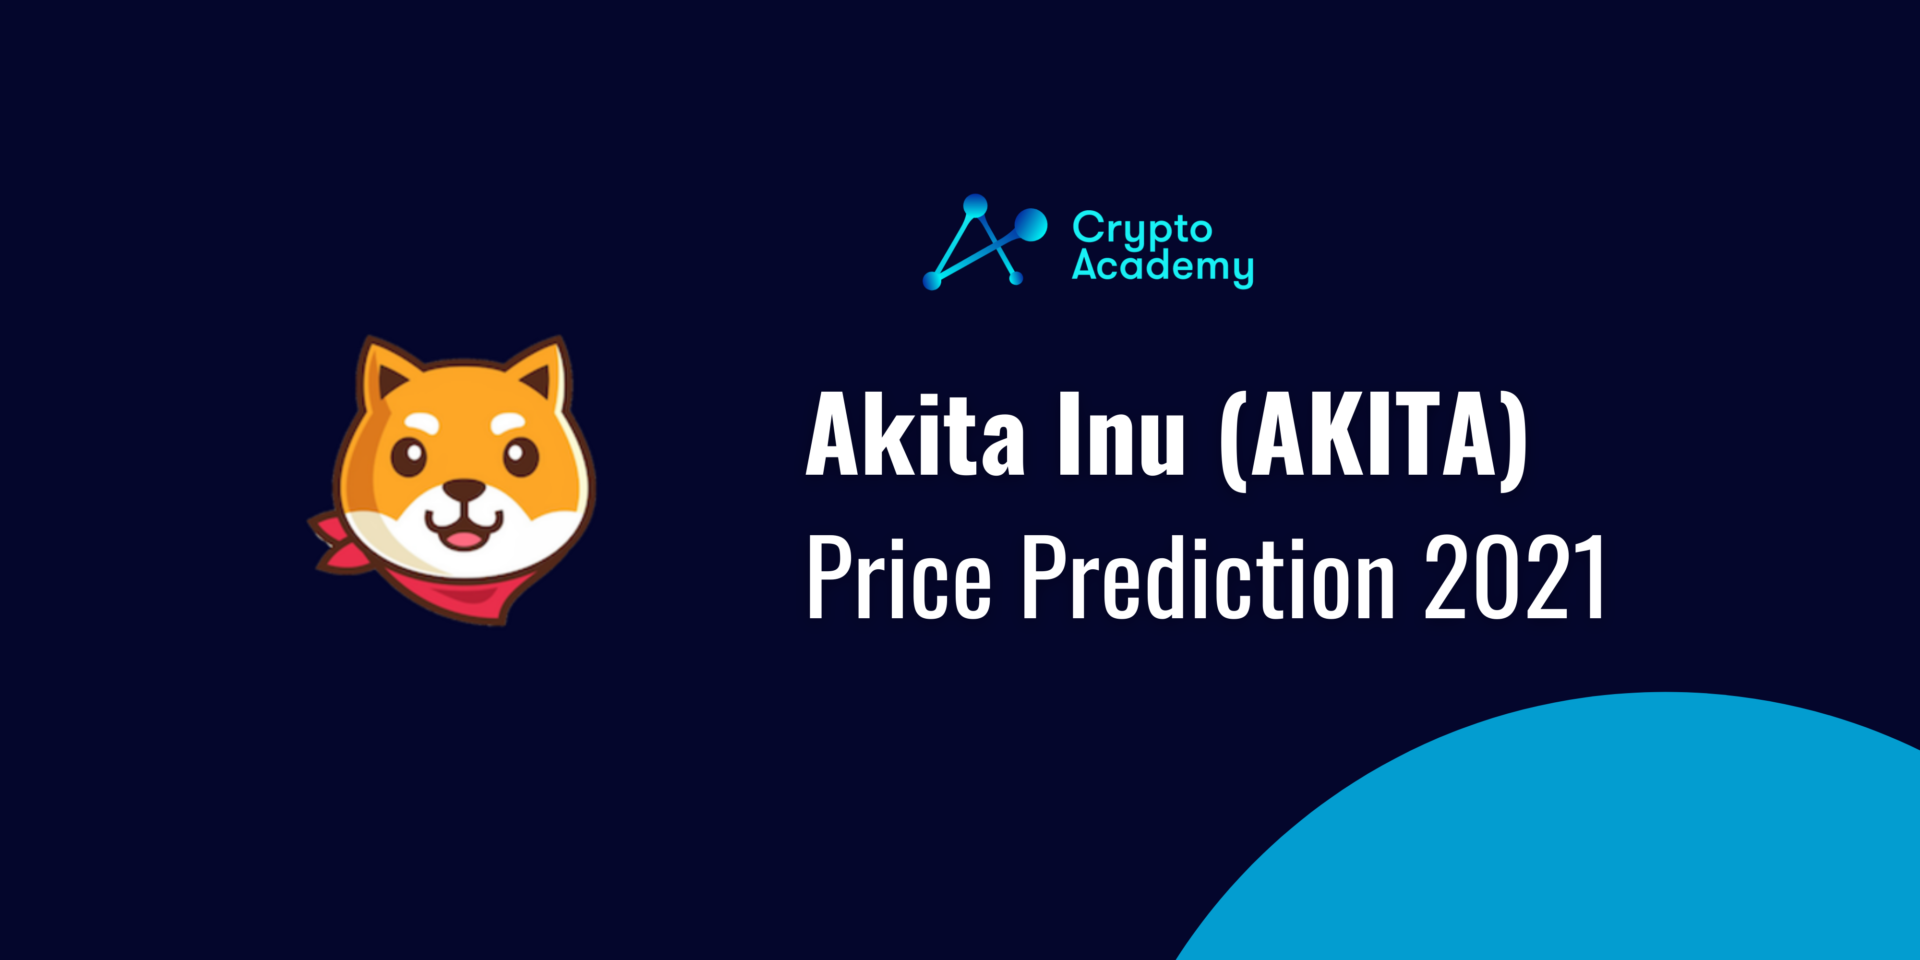 Akita Inu (AKITA) Price Prediction 2021 and Beyond - Is AKITA a Good Investment?